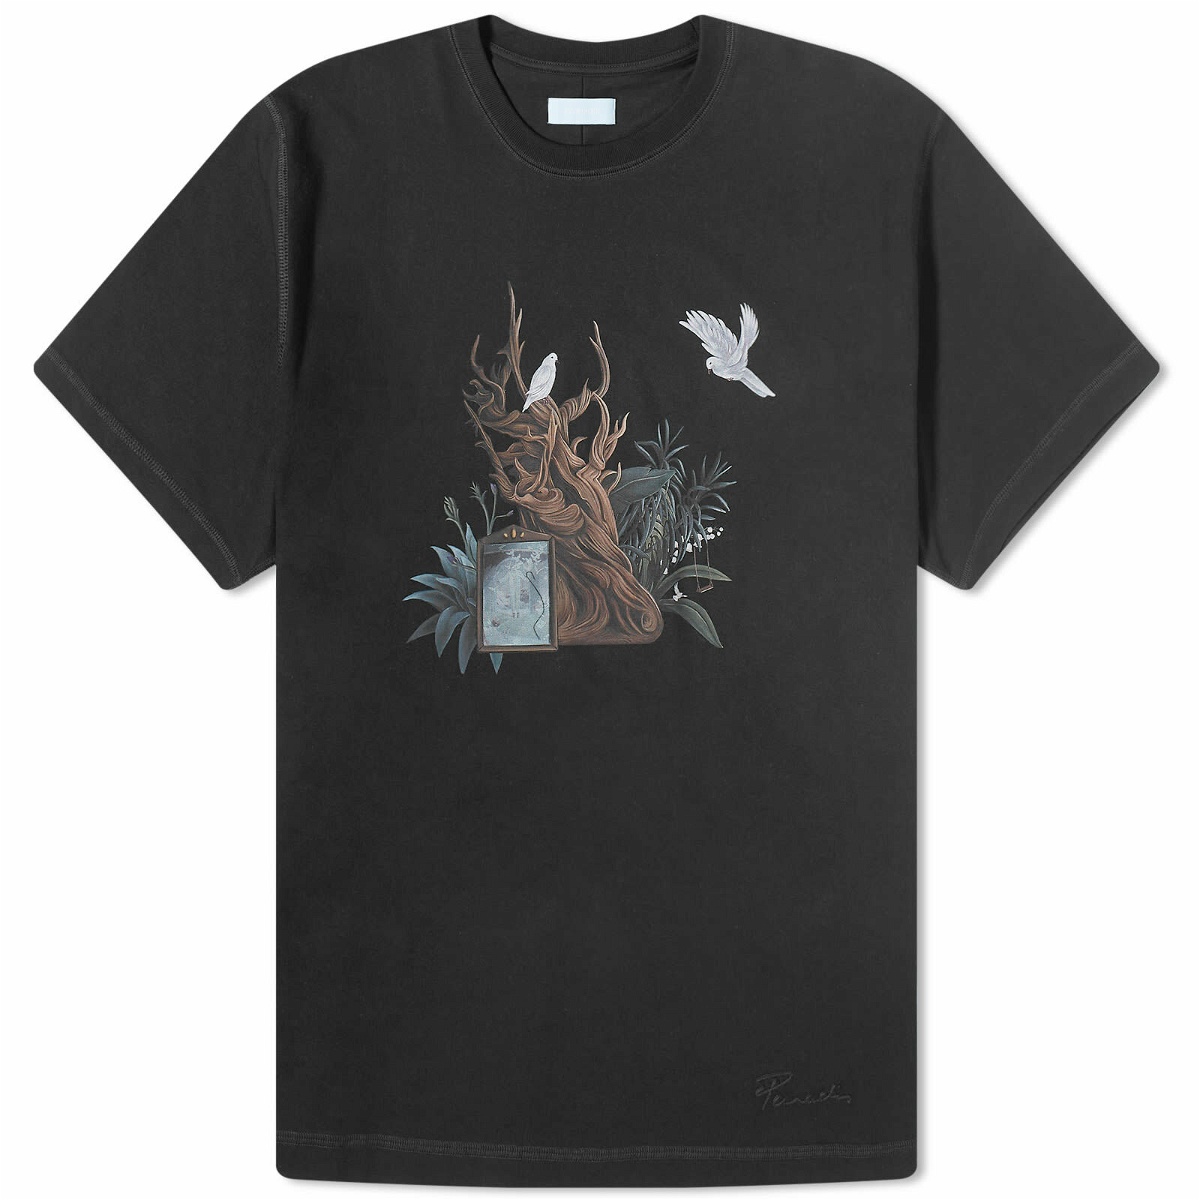 Photo: 3.Paradis Men's Old Tree T-Shirt in Black